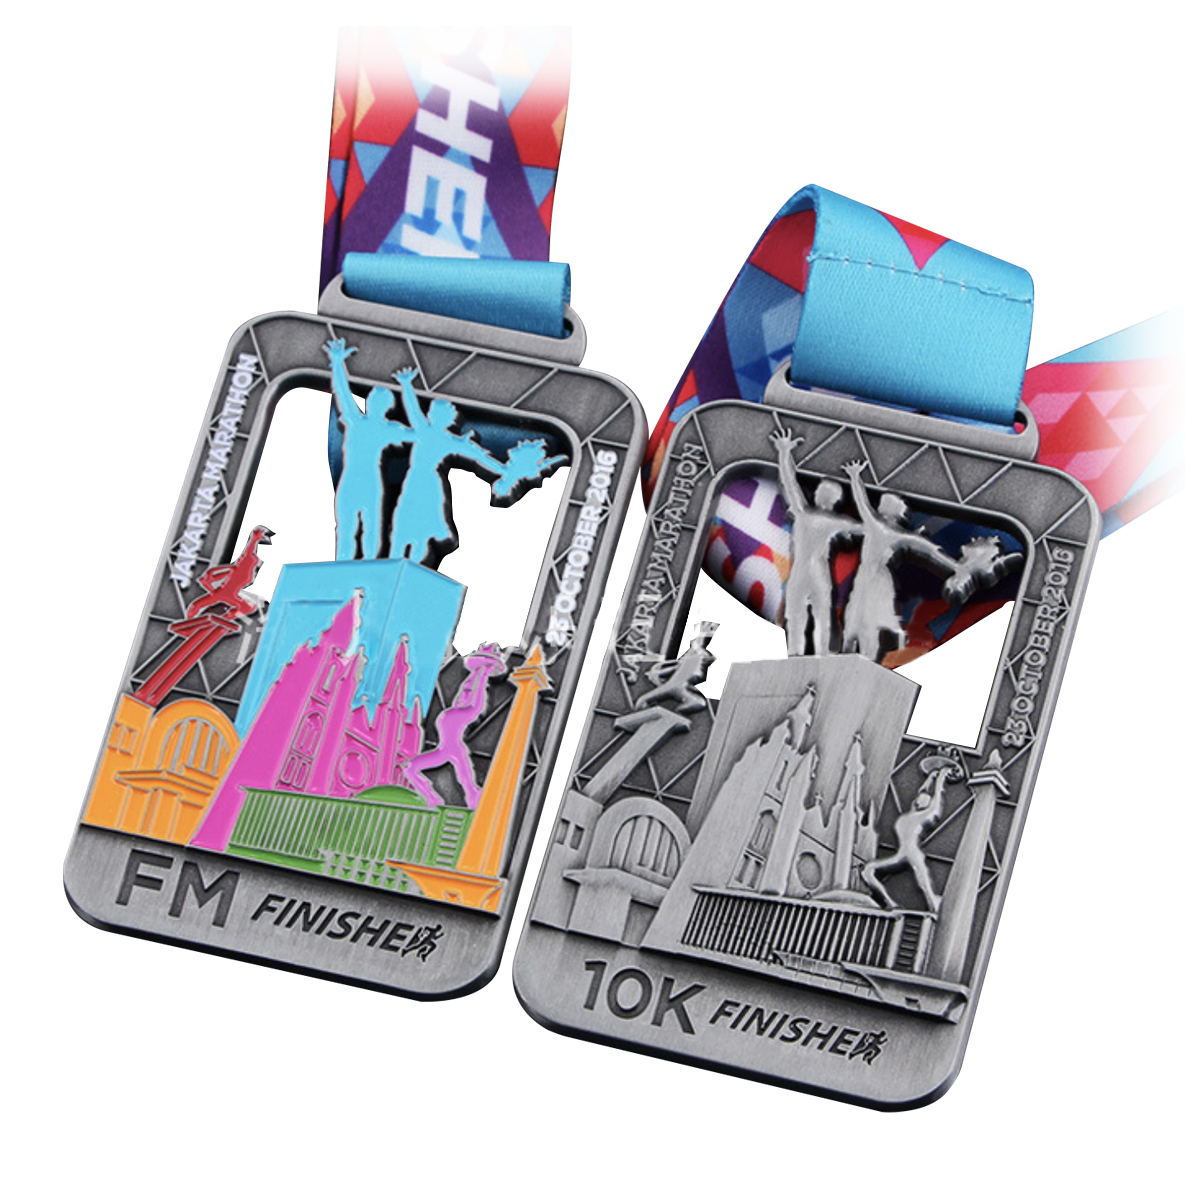 Marathon Finisher Medal